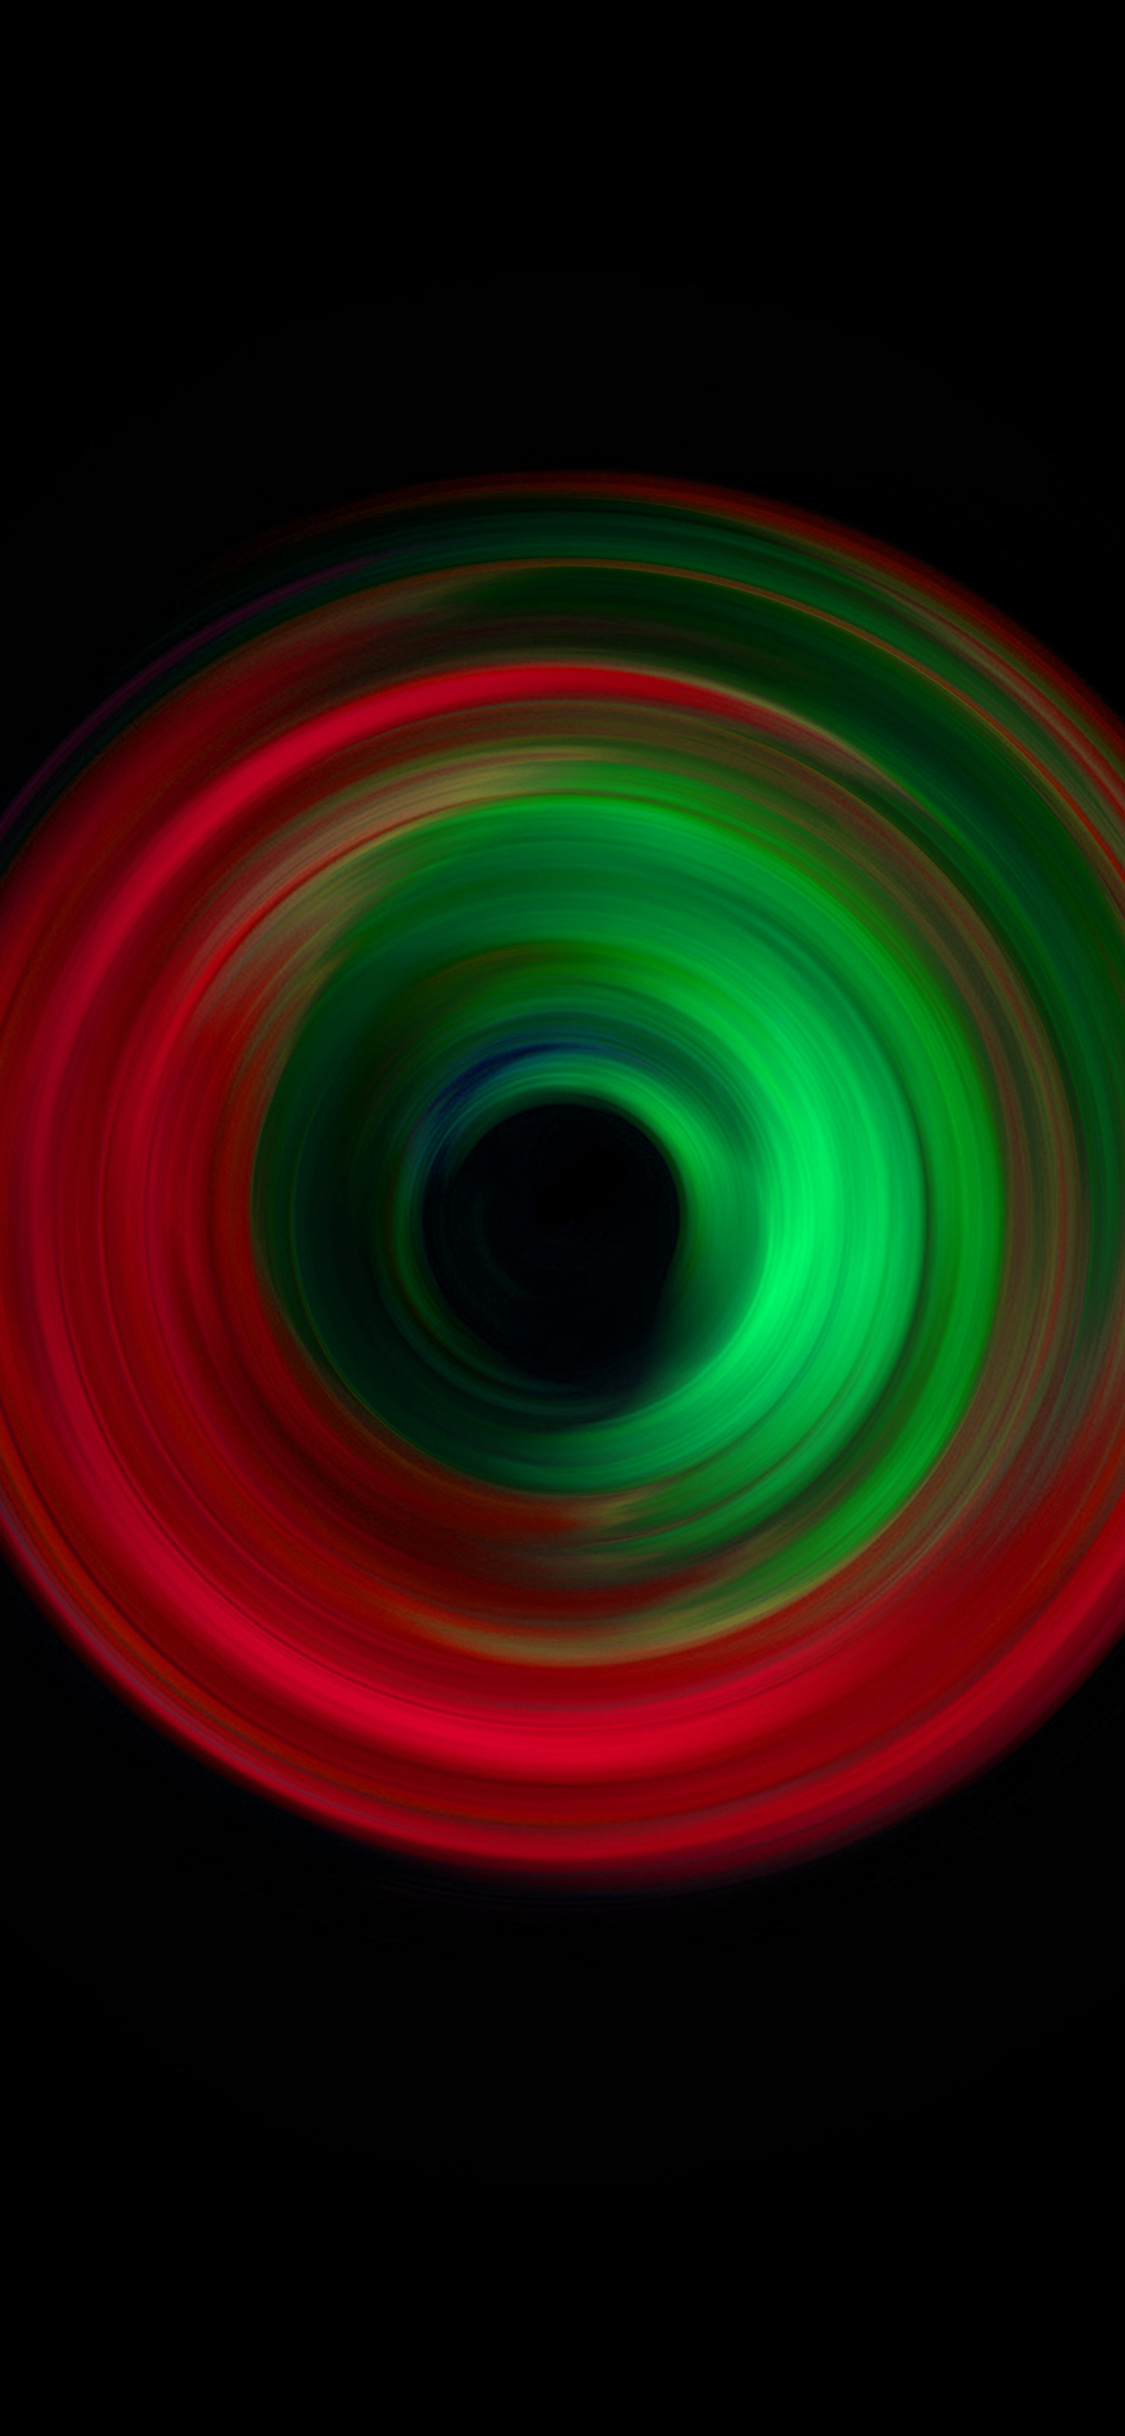 1125x2436 | iPhone11 wallpaper | vw78-circle-dark-green-redpattern-background